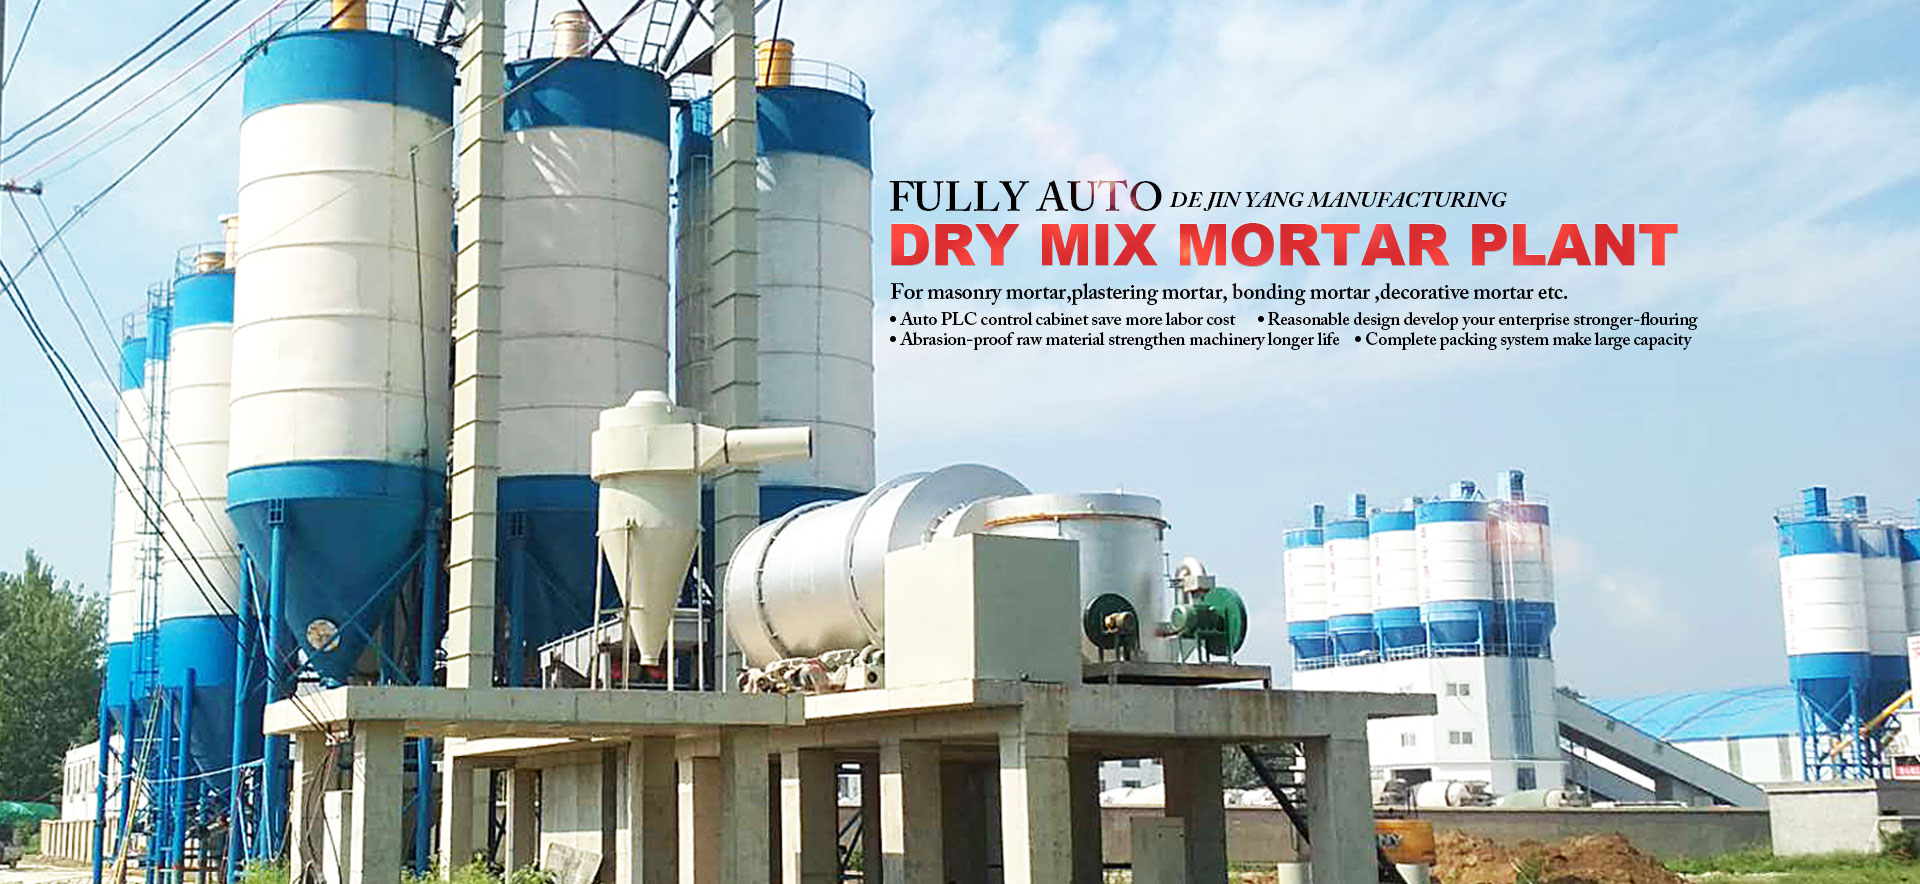 Fully Auto Dry Mix Mortar Plant for masonry mortar,plastering mortar, bonding mortar ,decorative mortar etc